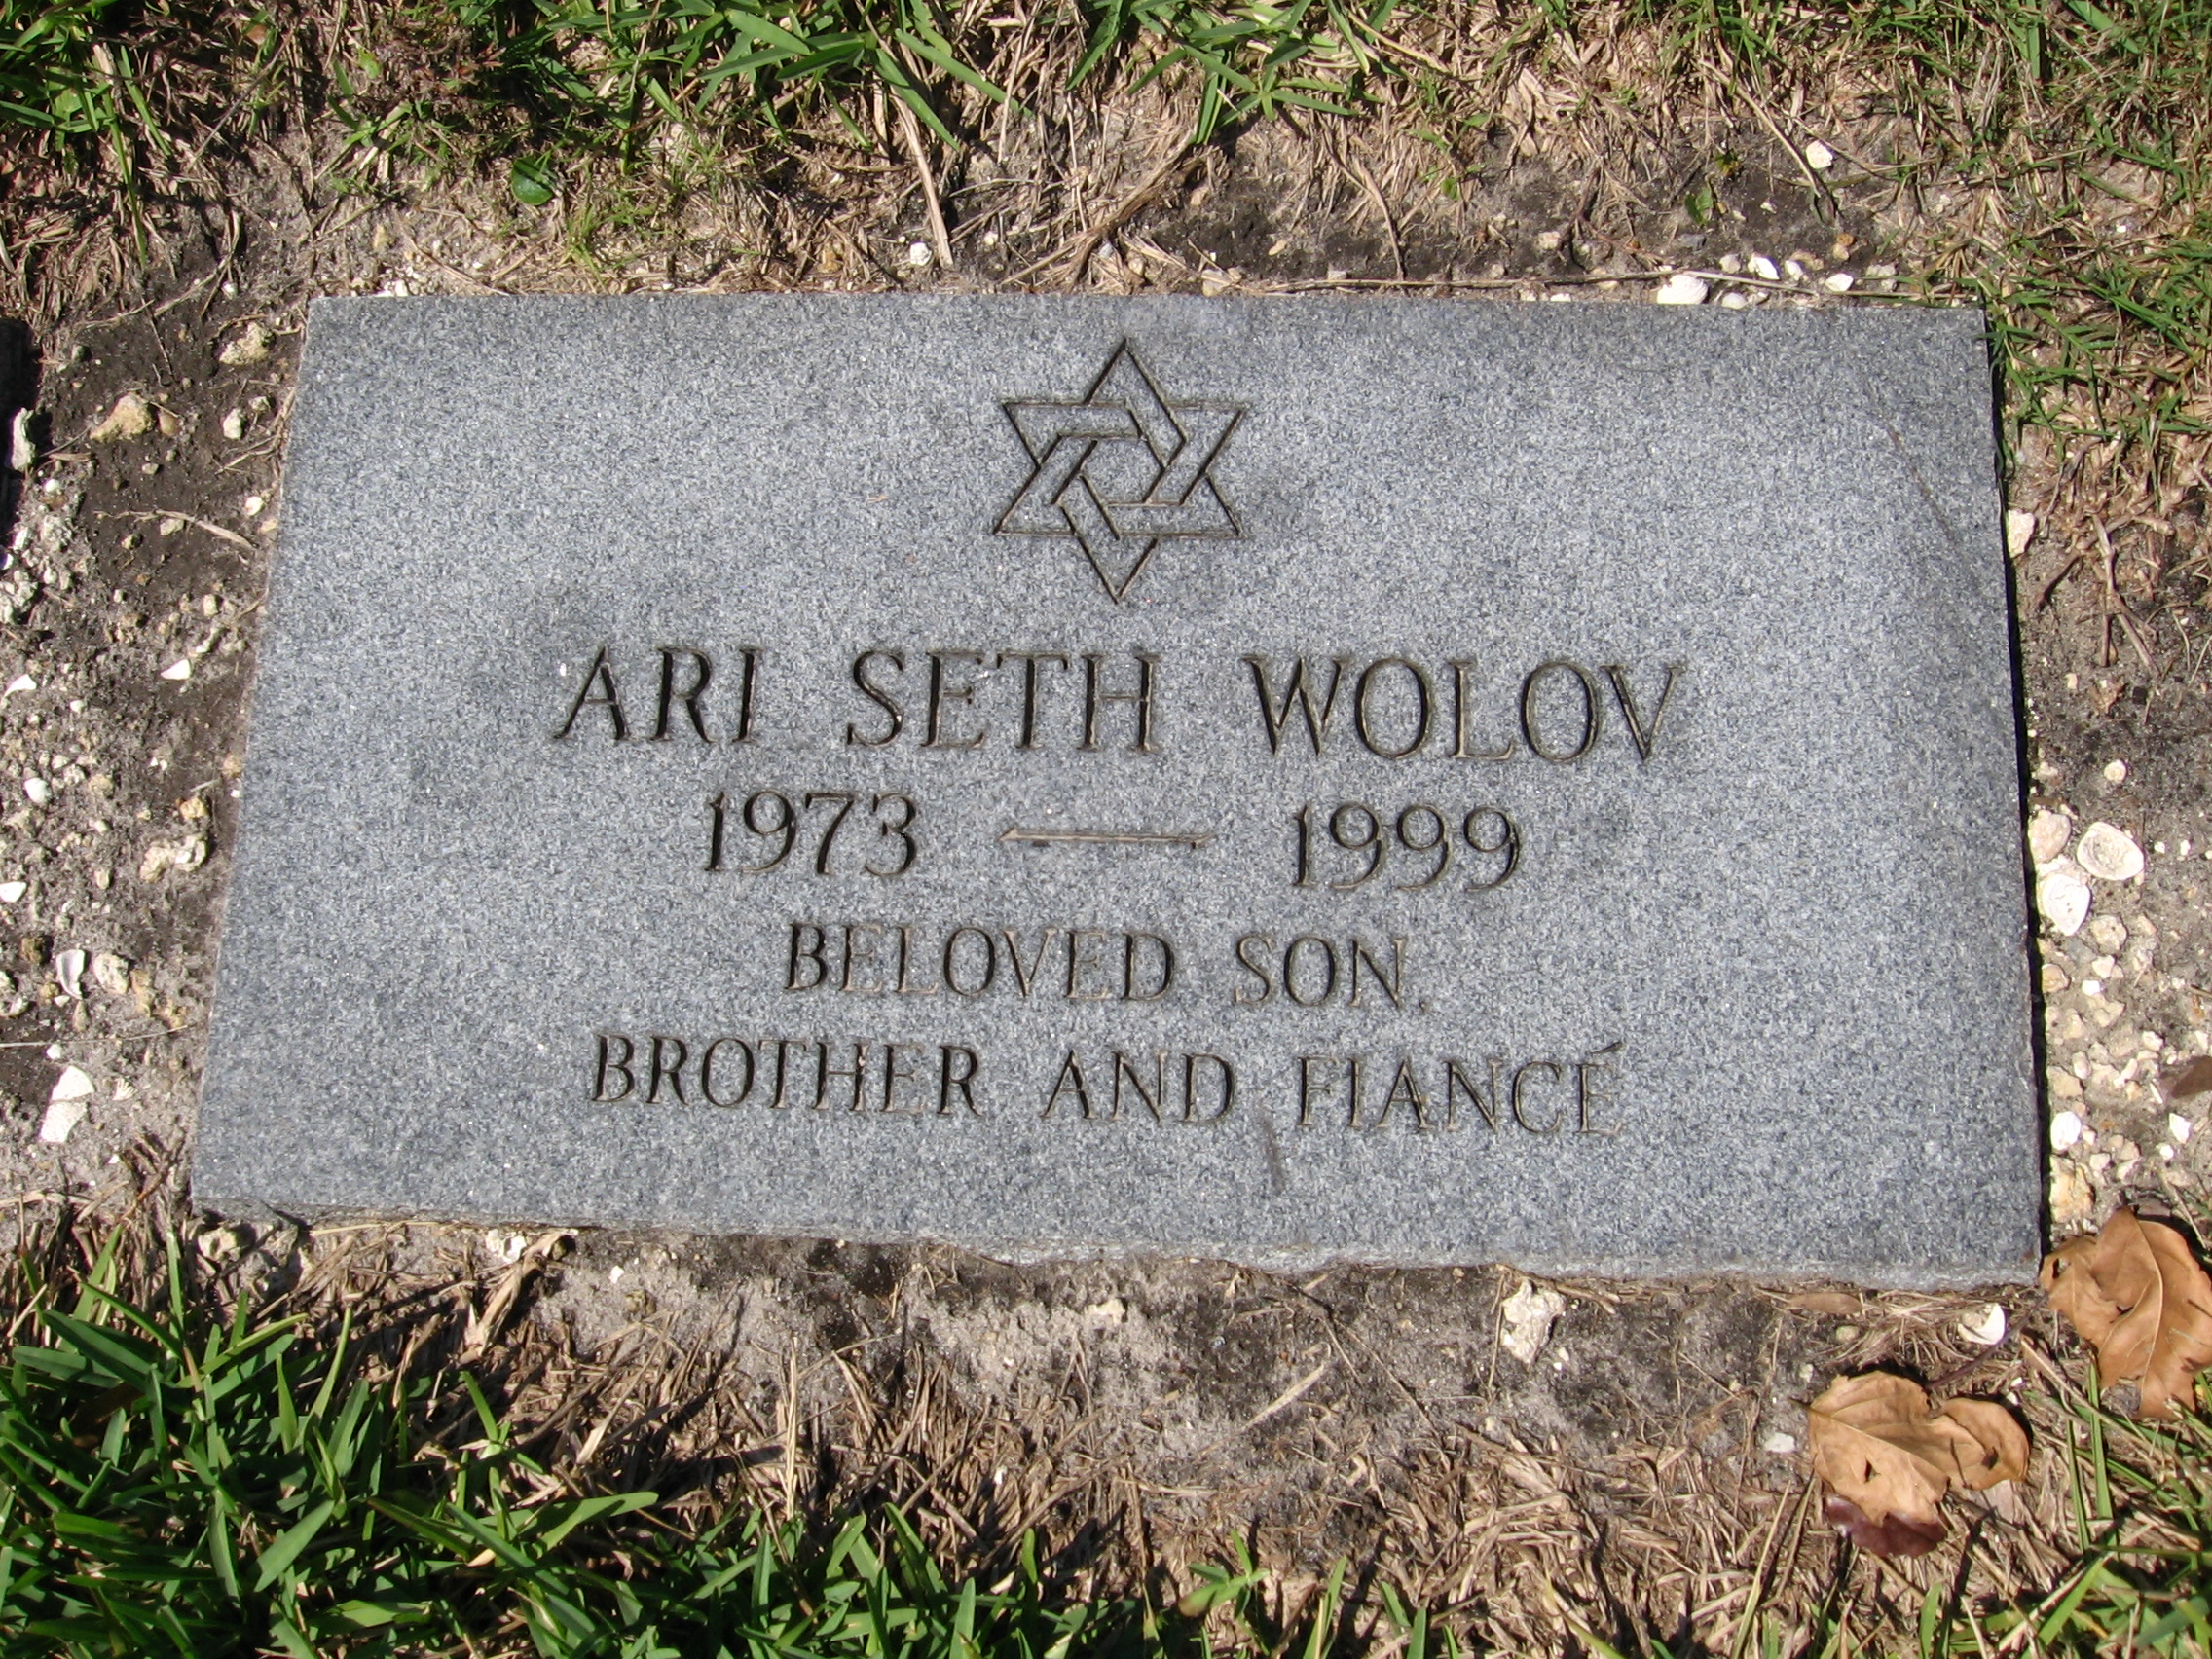 Ari Seth Wolov